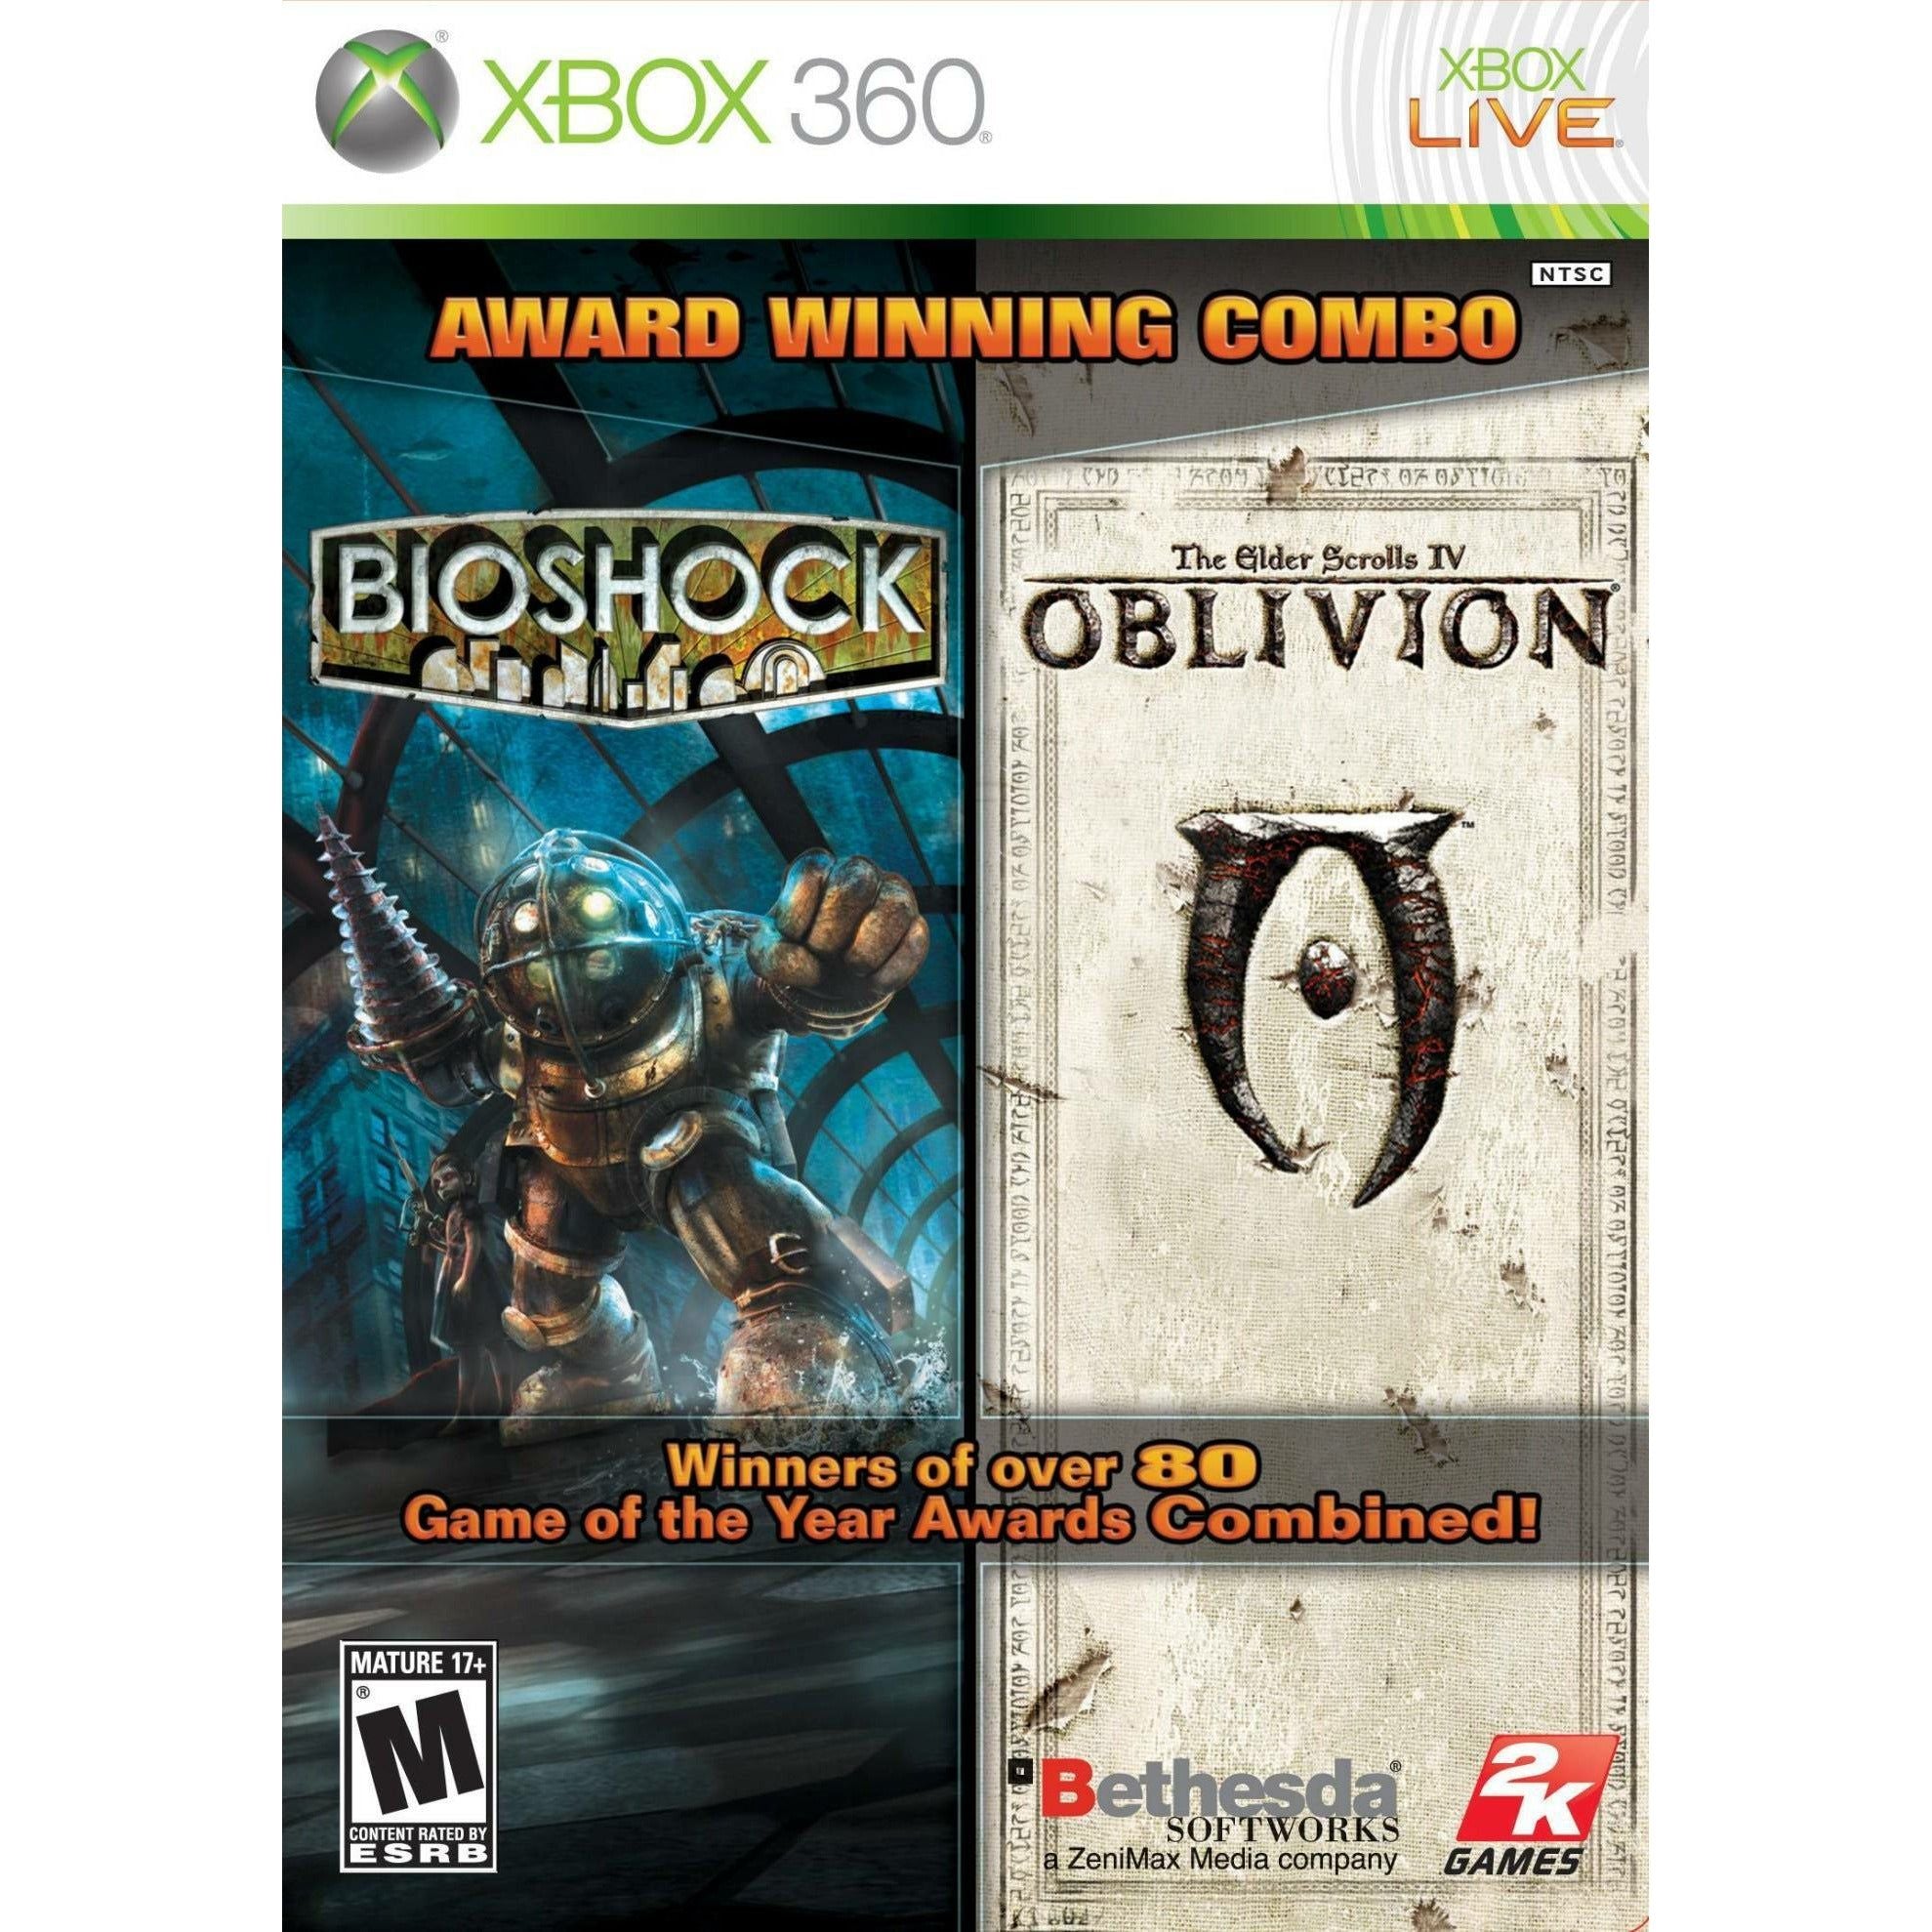 XBOX 360 - Bioshock & The Elder Scrolls IV Oblivion Combo Pack